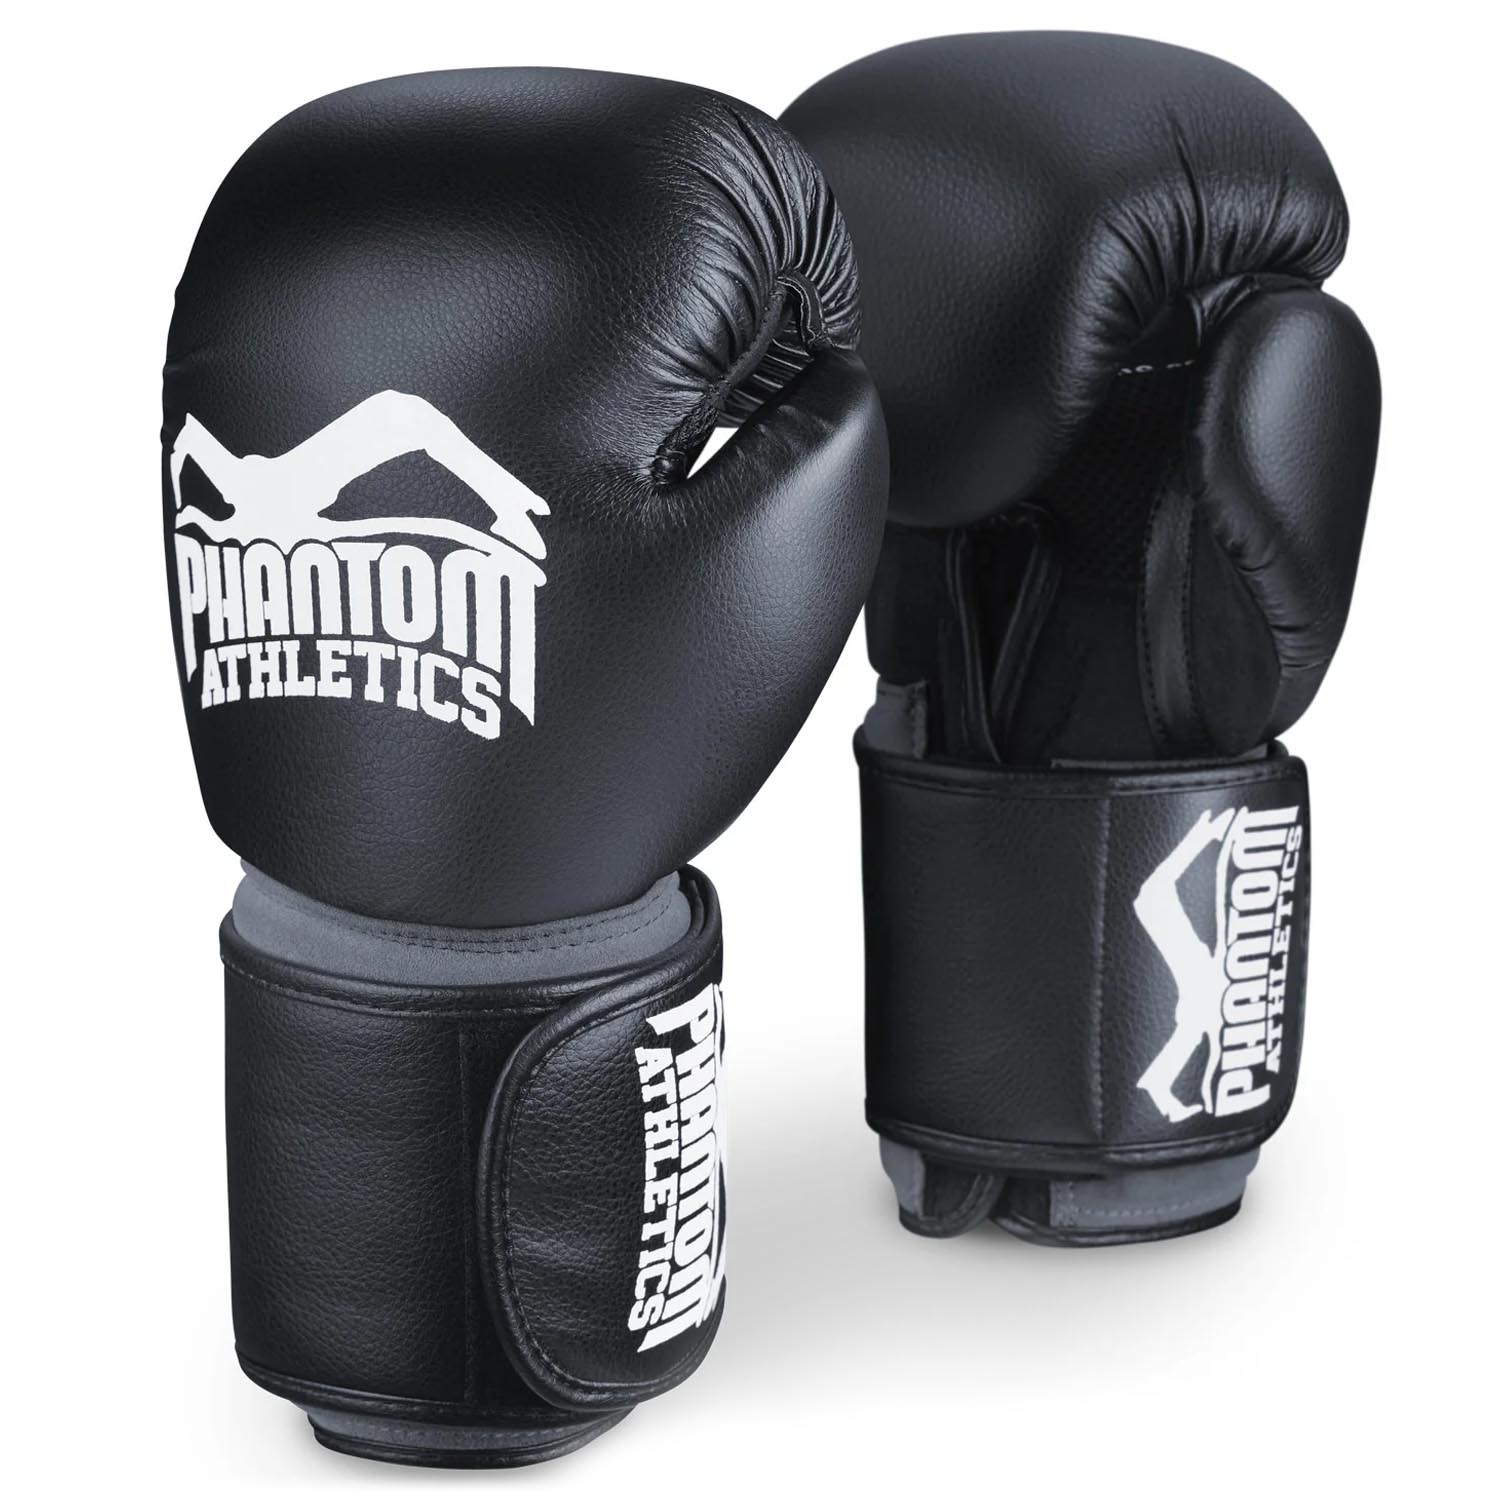 Phantom Athletics Boxing Gloves, Elite ATF, black